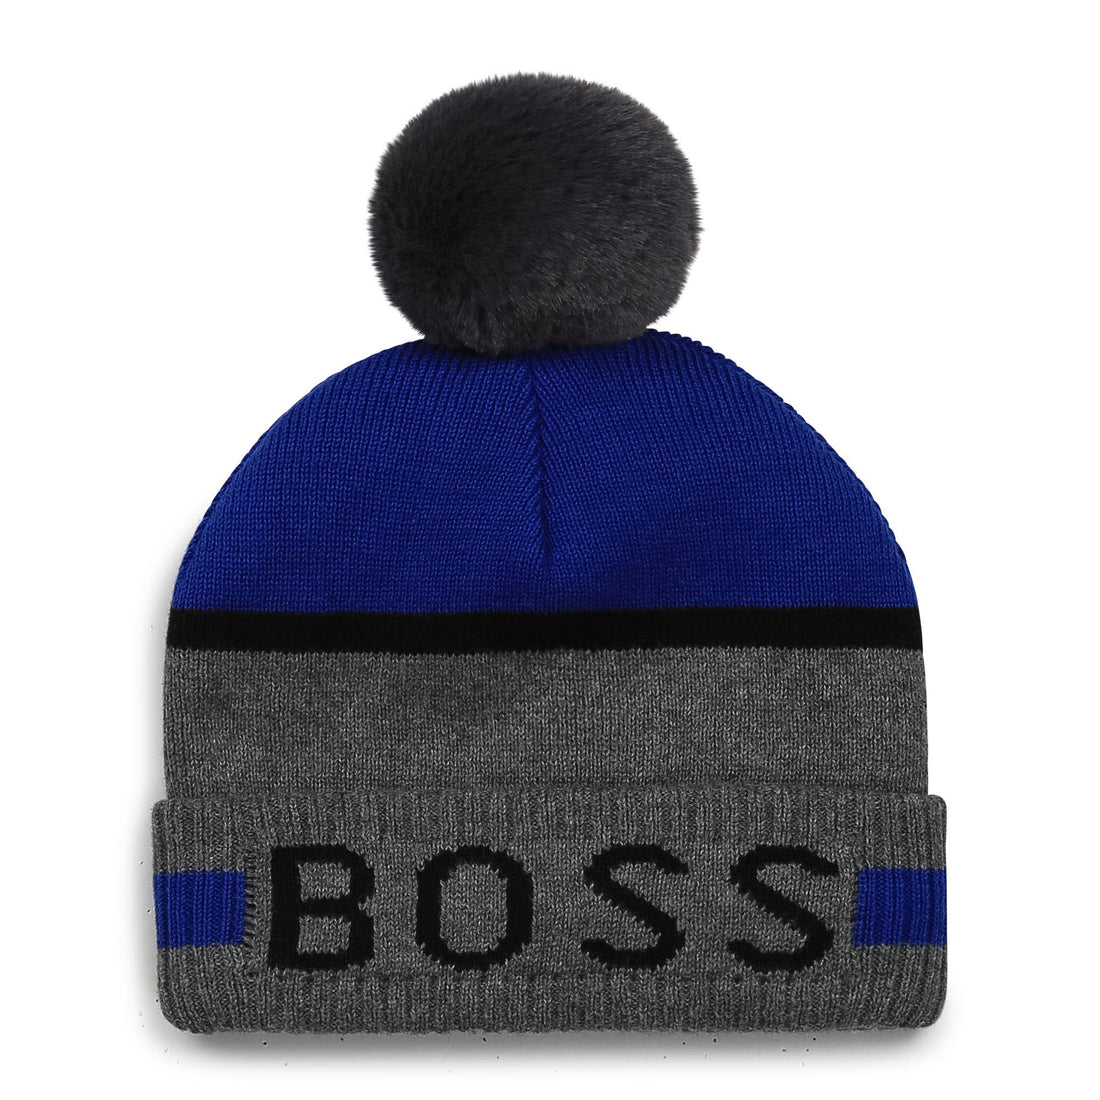 Boss Pull On Hat - J01122